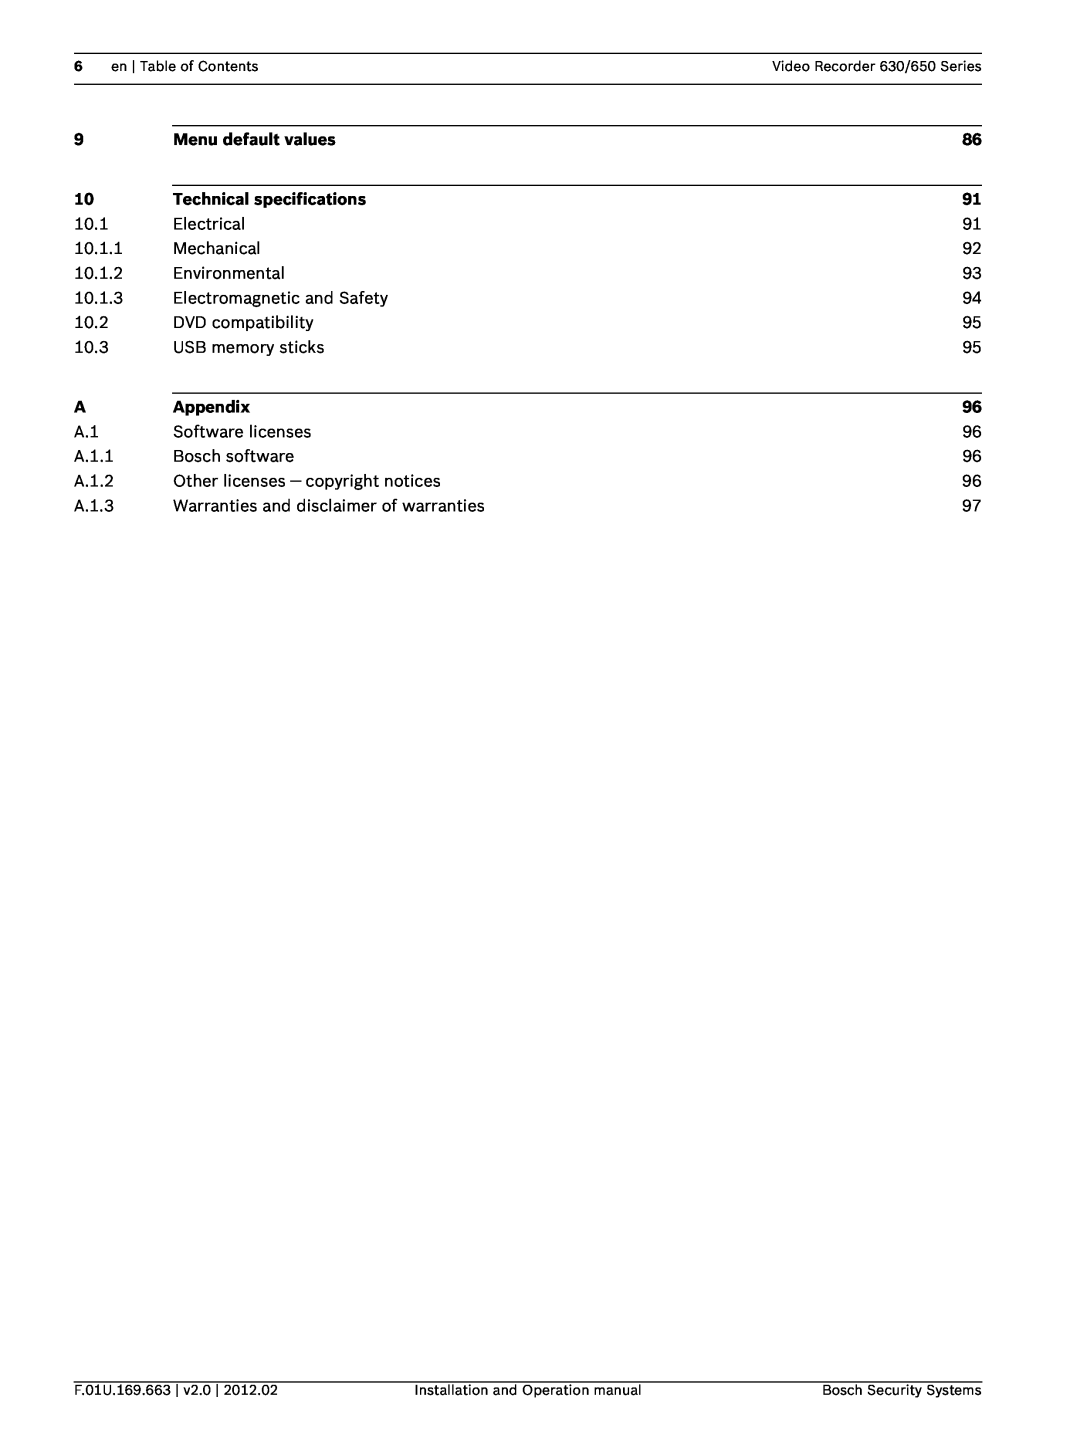 Bosch Appliances 650, 630 operation manual Menu default values, Technical specifications, Appendix 